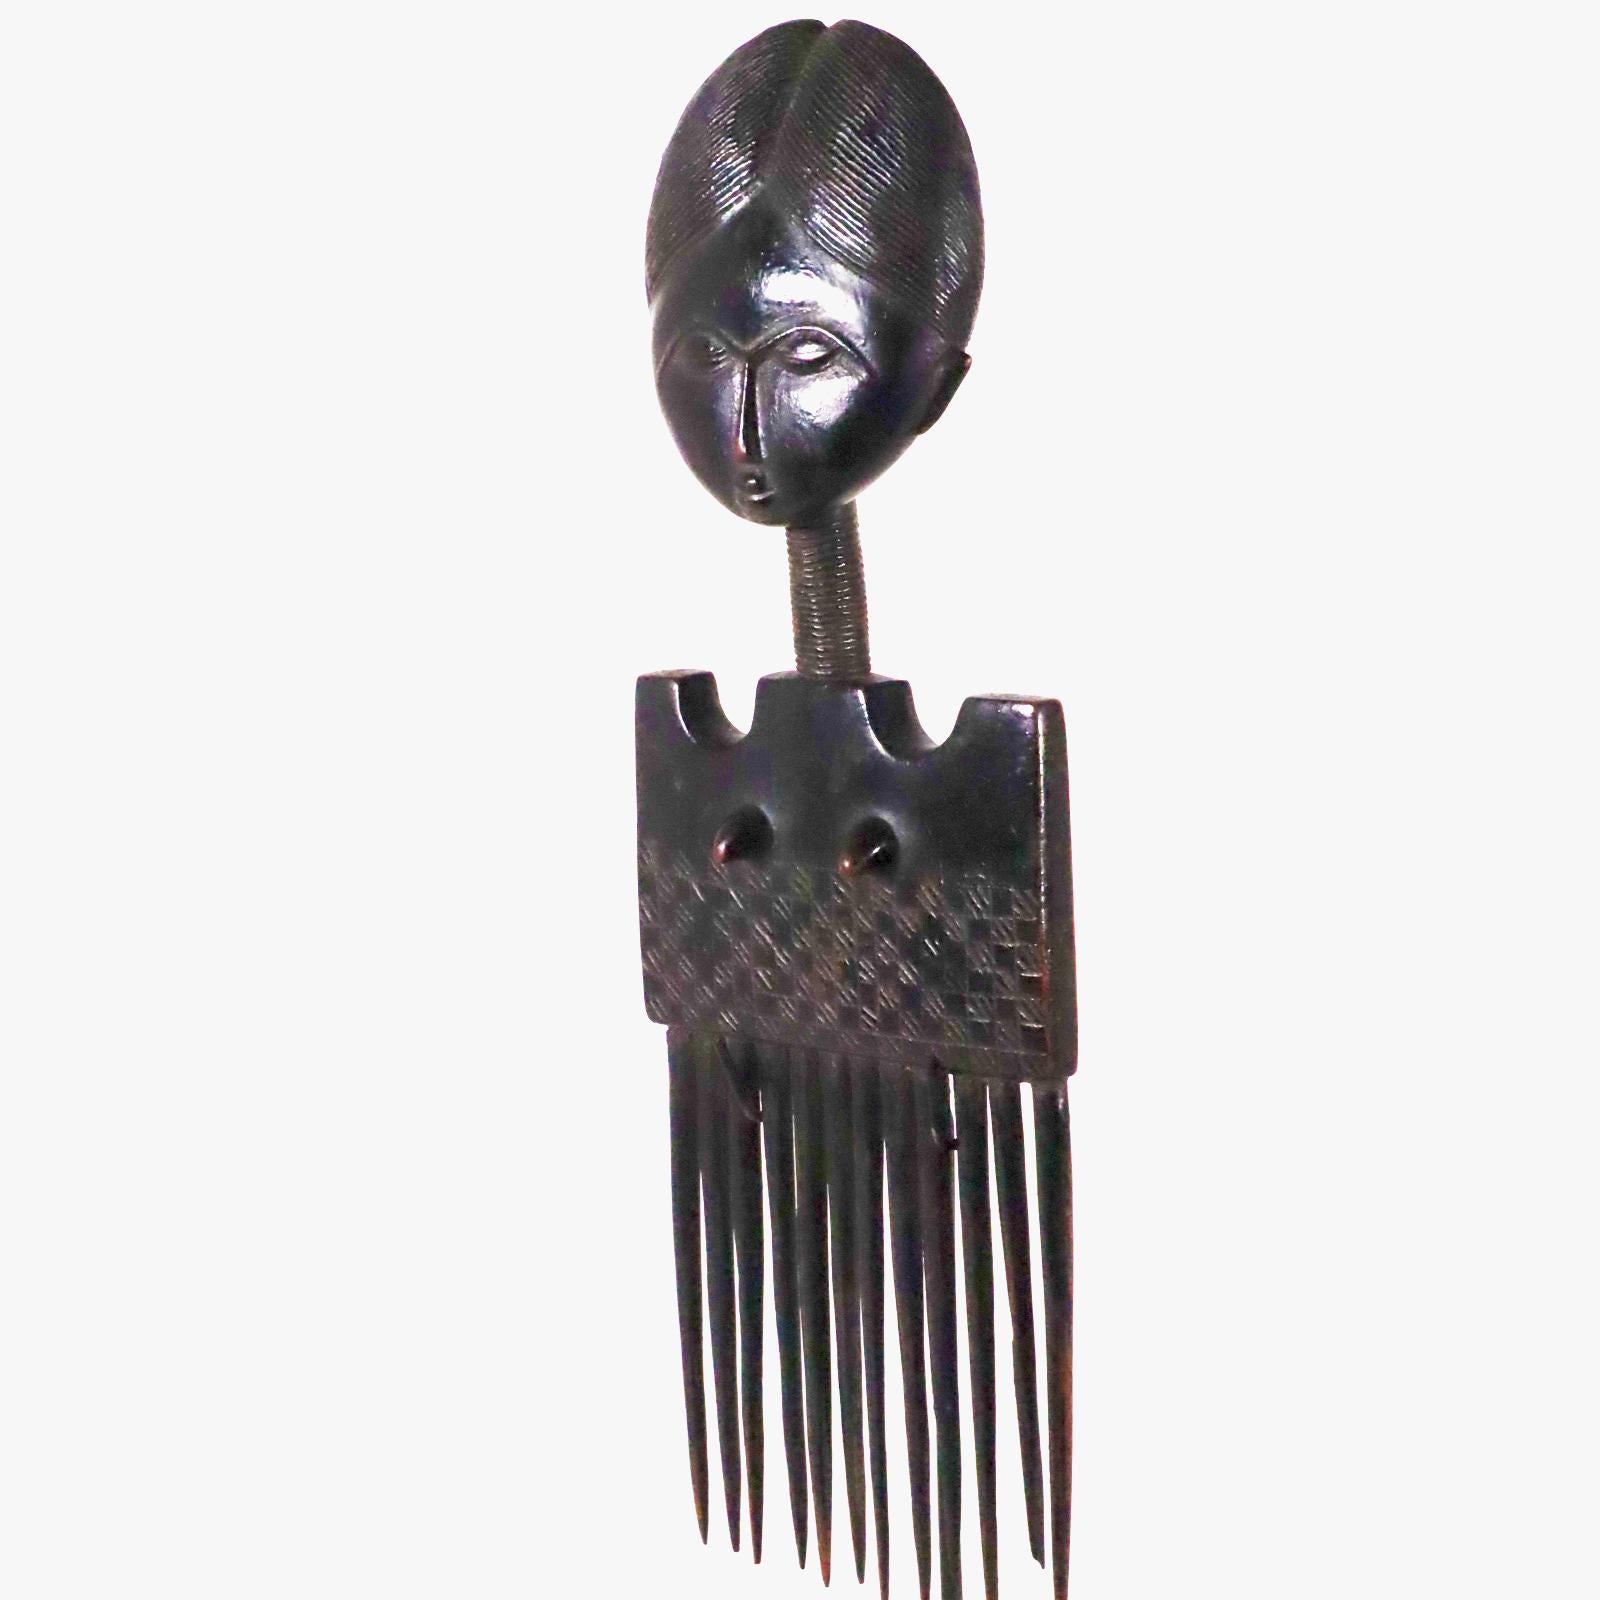 Tribal Akan Ashanti Prestige Hair Ornament or Comb Classic Ghana African Art